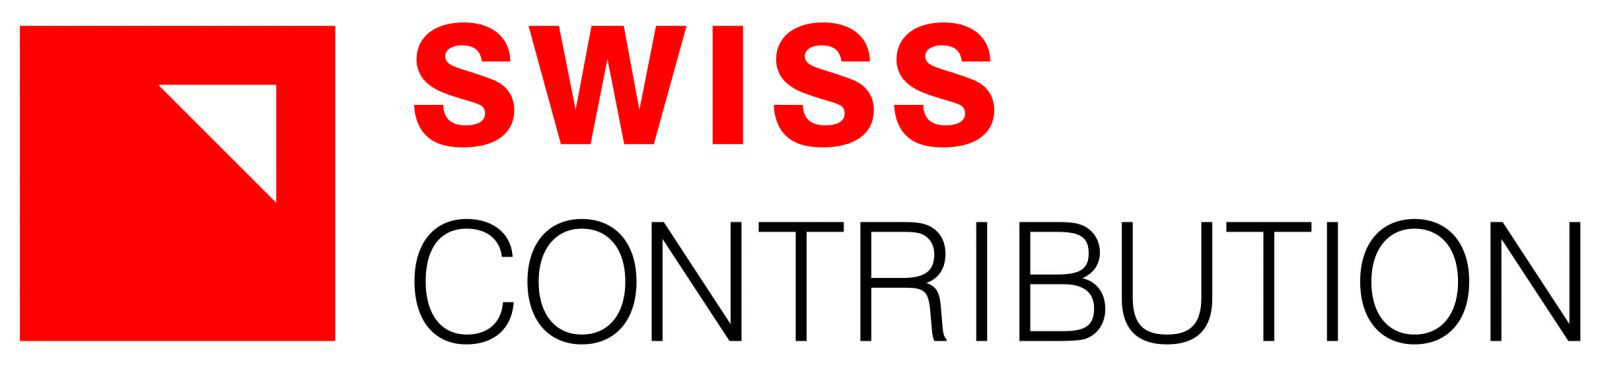 Swiss contribution